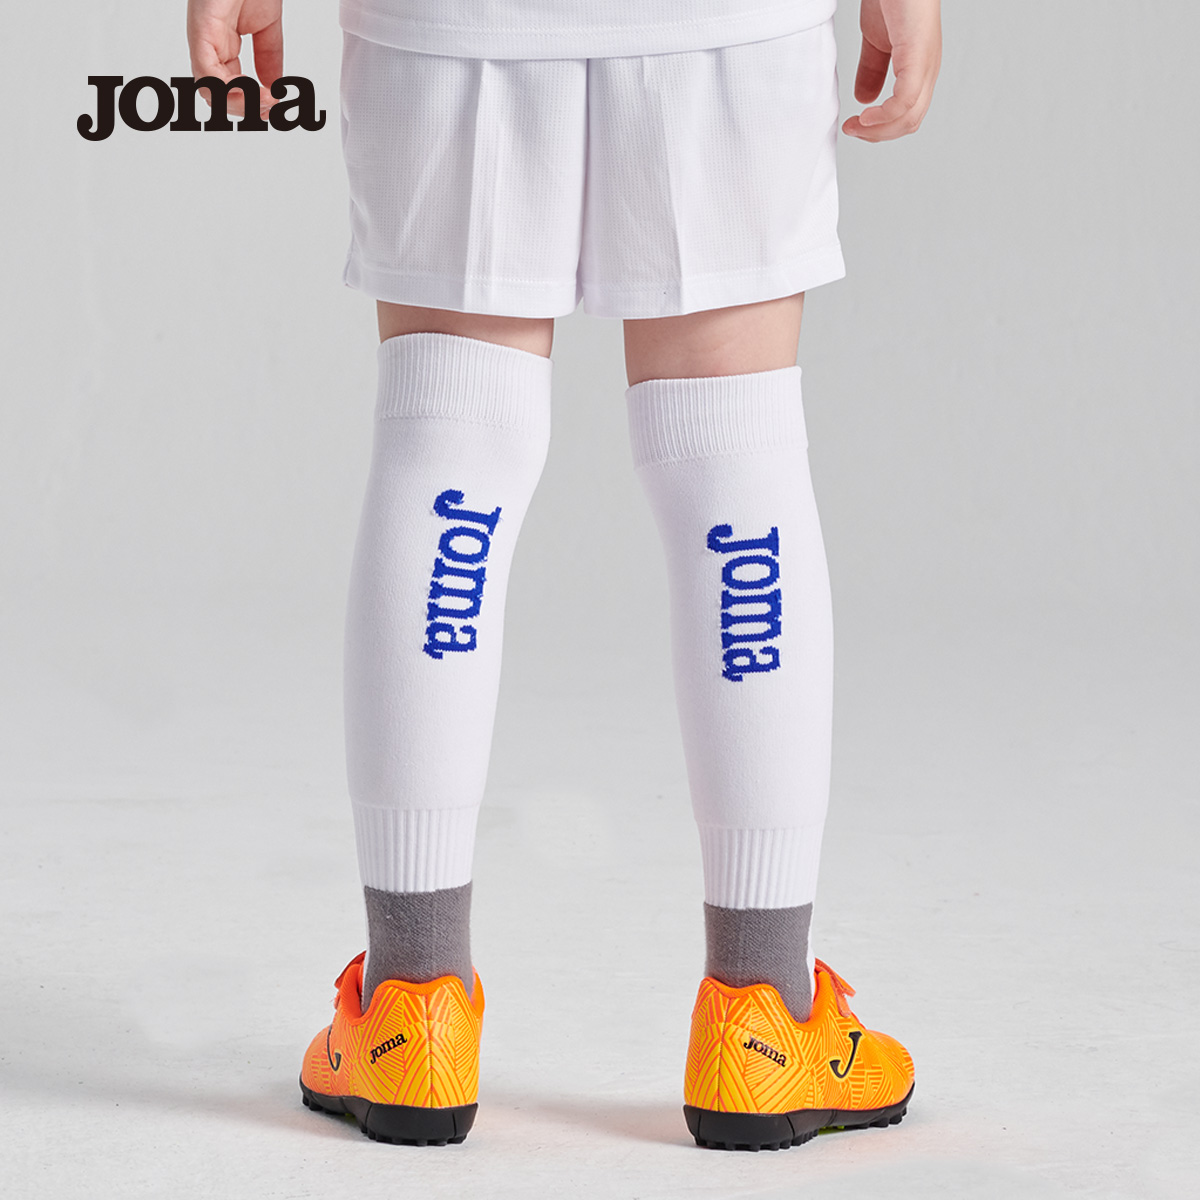 Joma荷马足球袜儿童中筒防滑足球训练袜毛巾底短筒专业运动袜子 - 图2